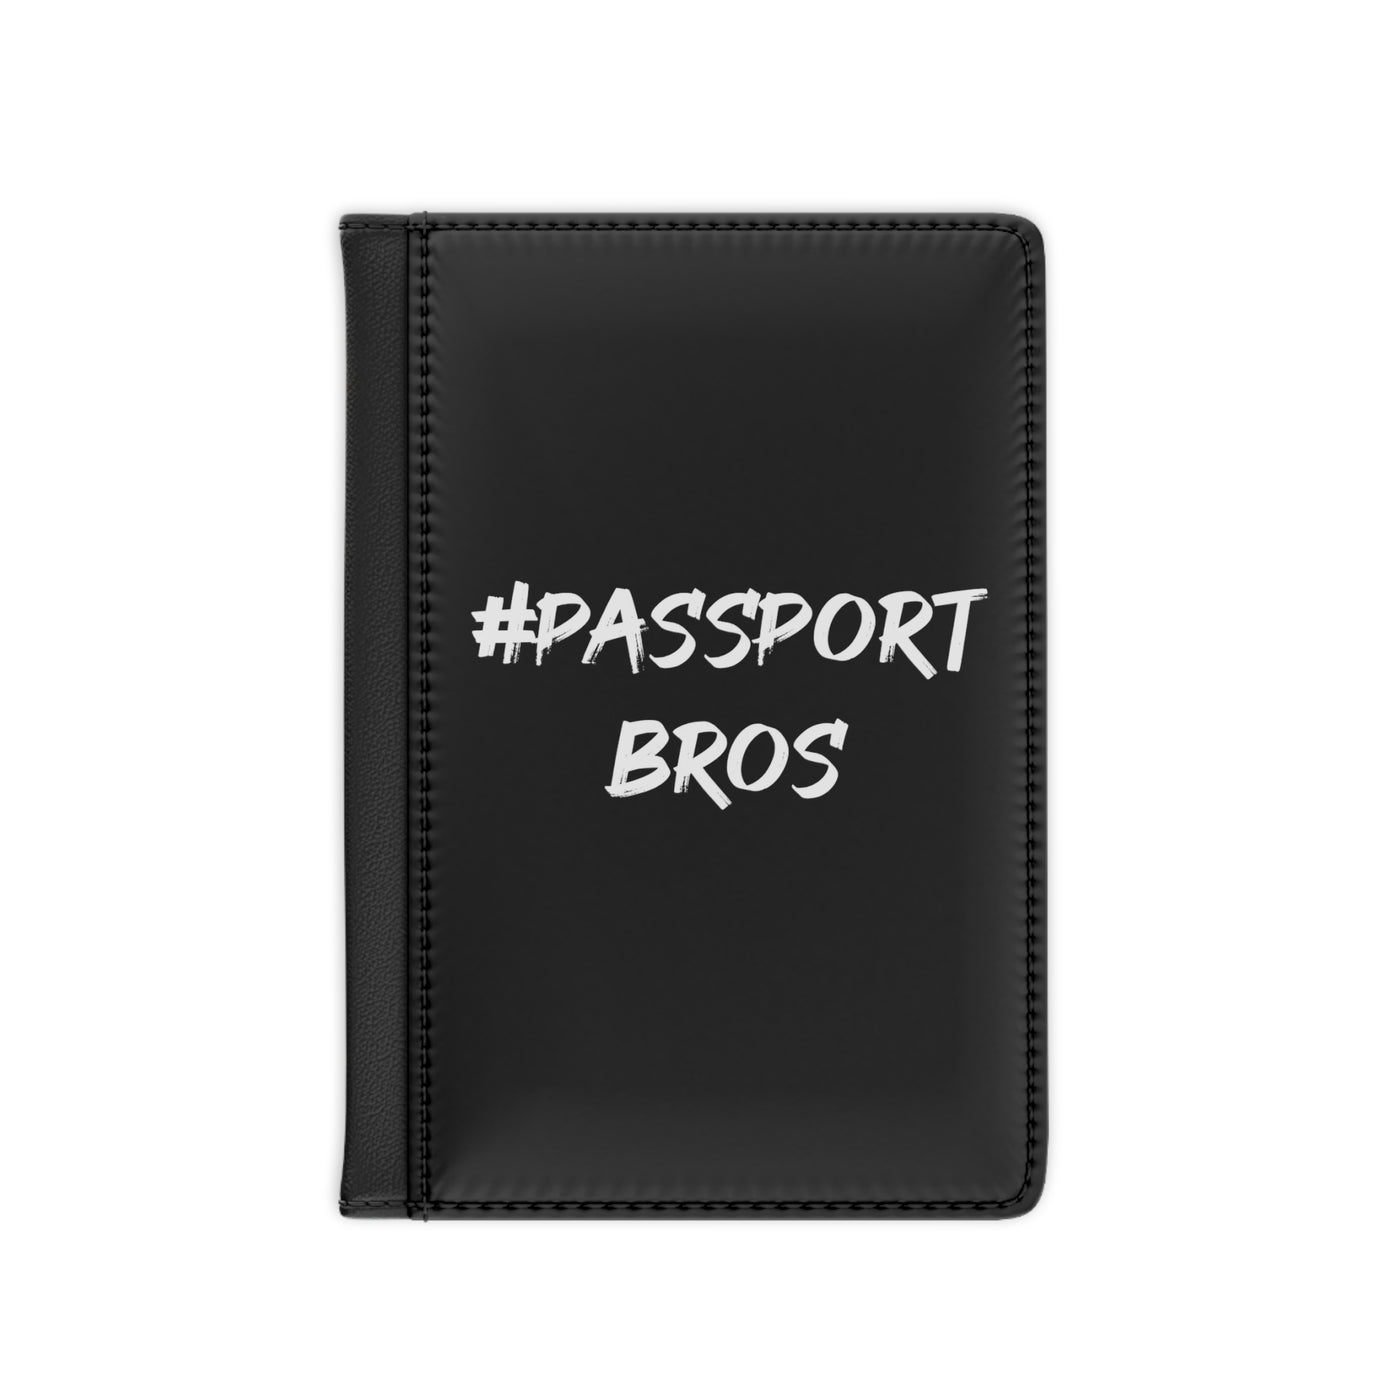 "PB" Spray Paint Passport Cover